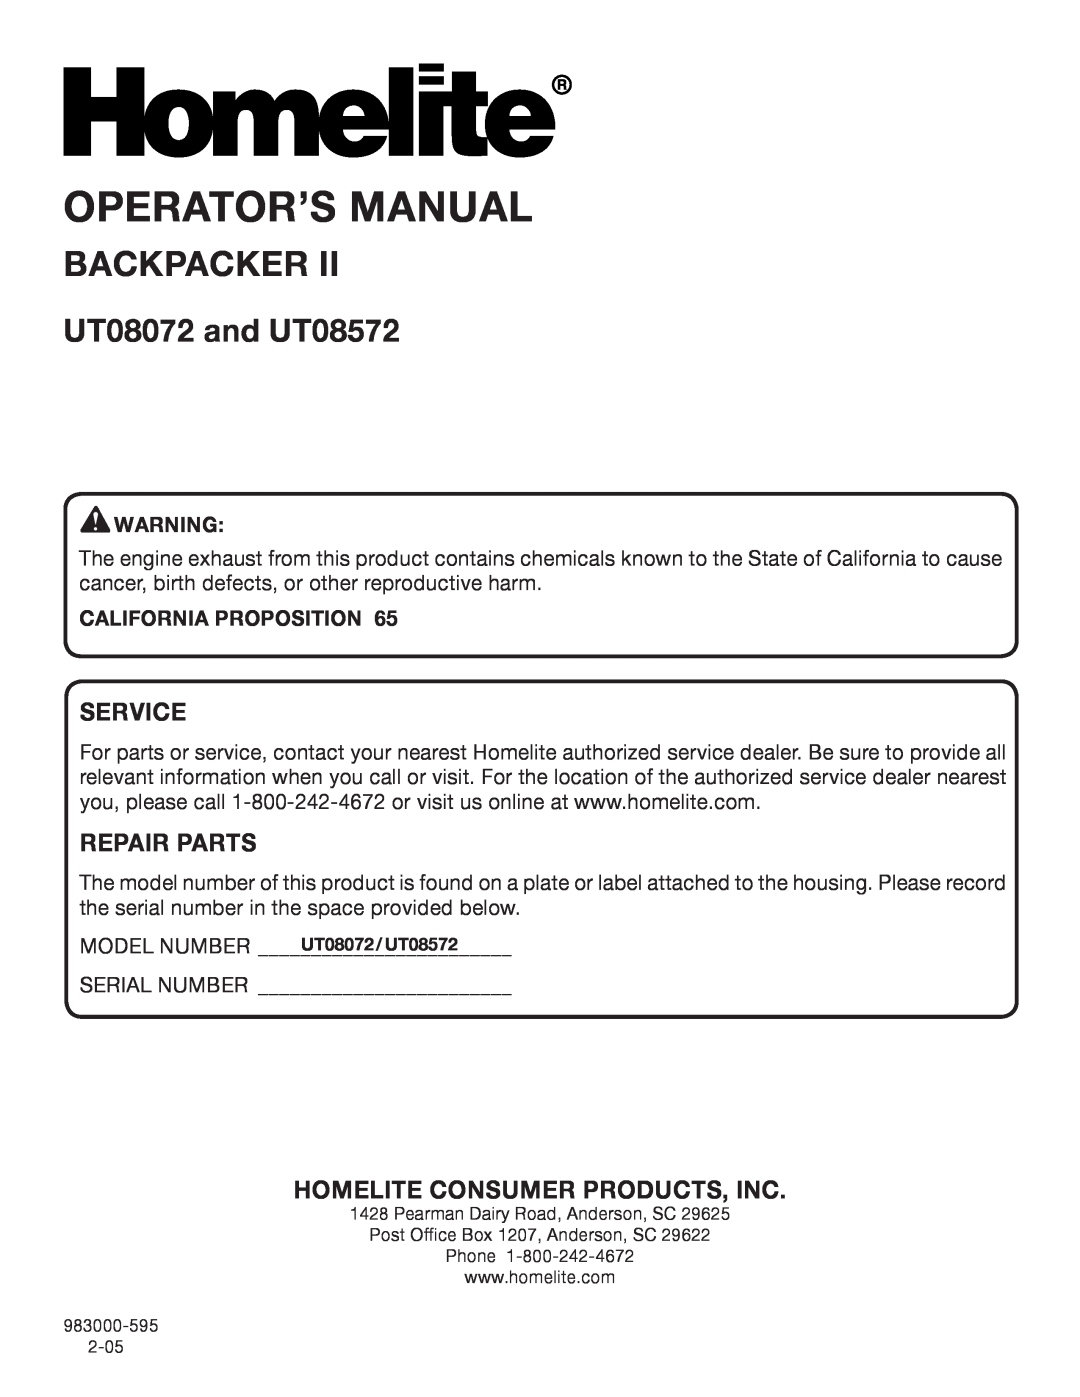 Homelite Operator’S Manual, Backpacker, UT08072 and UT08572, Service, Repair Parts, Homelite Consumer Products, Inc 